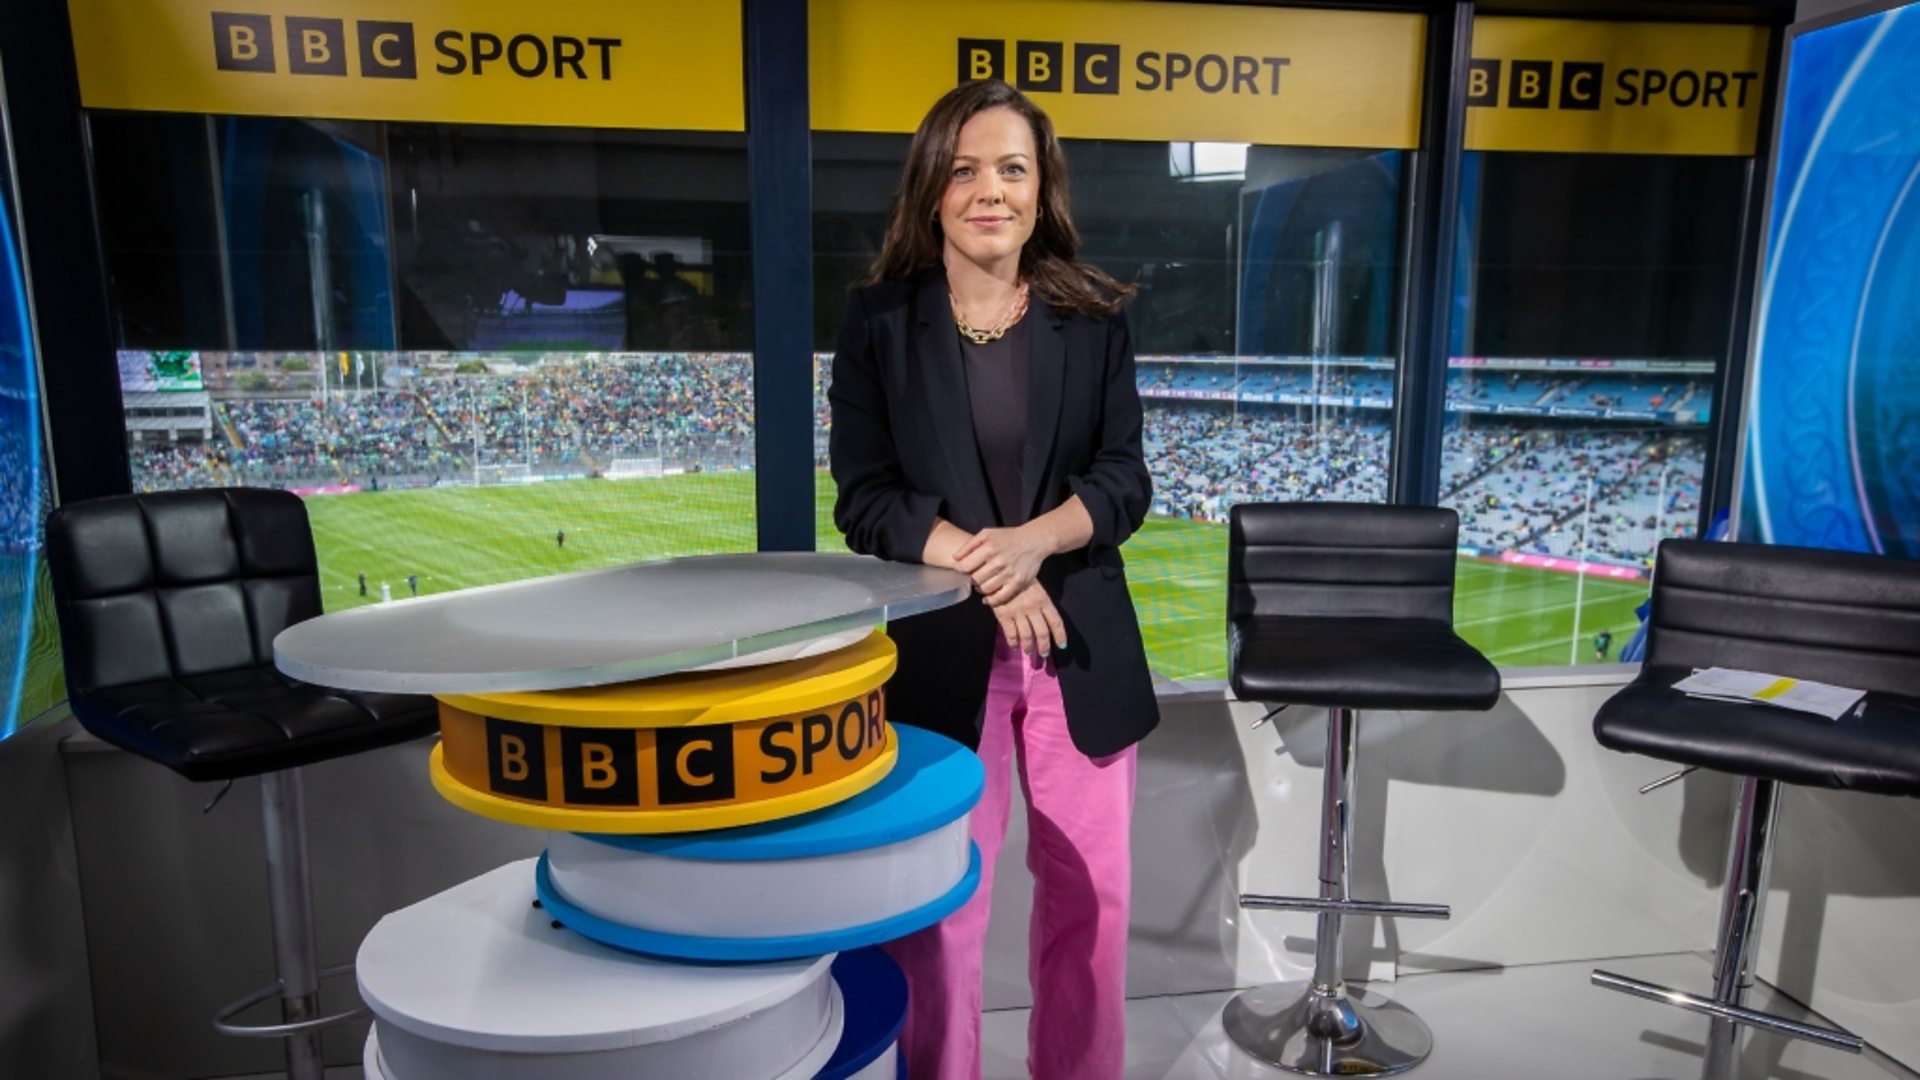 All-Ireland Senior Football Final Live Across BBC iPlayer, BBC Two and BBC Two NI